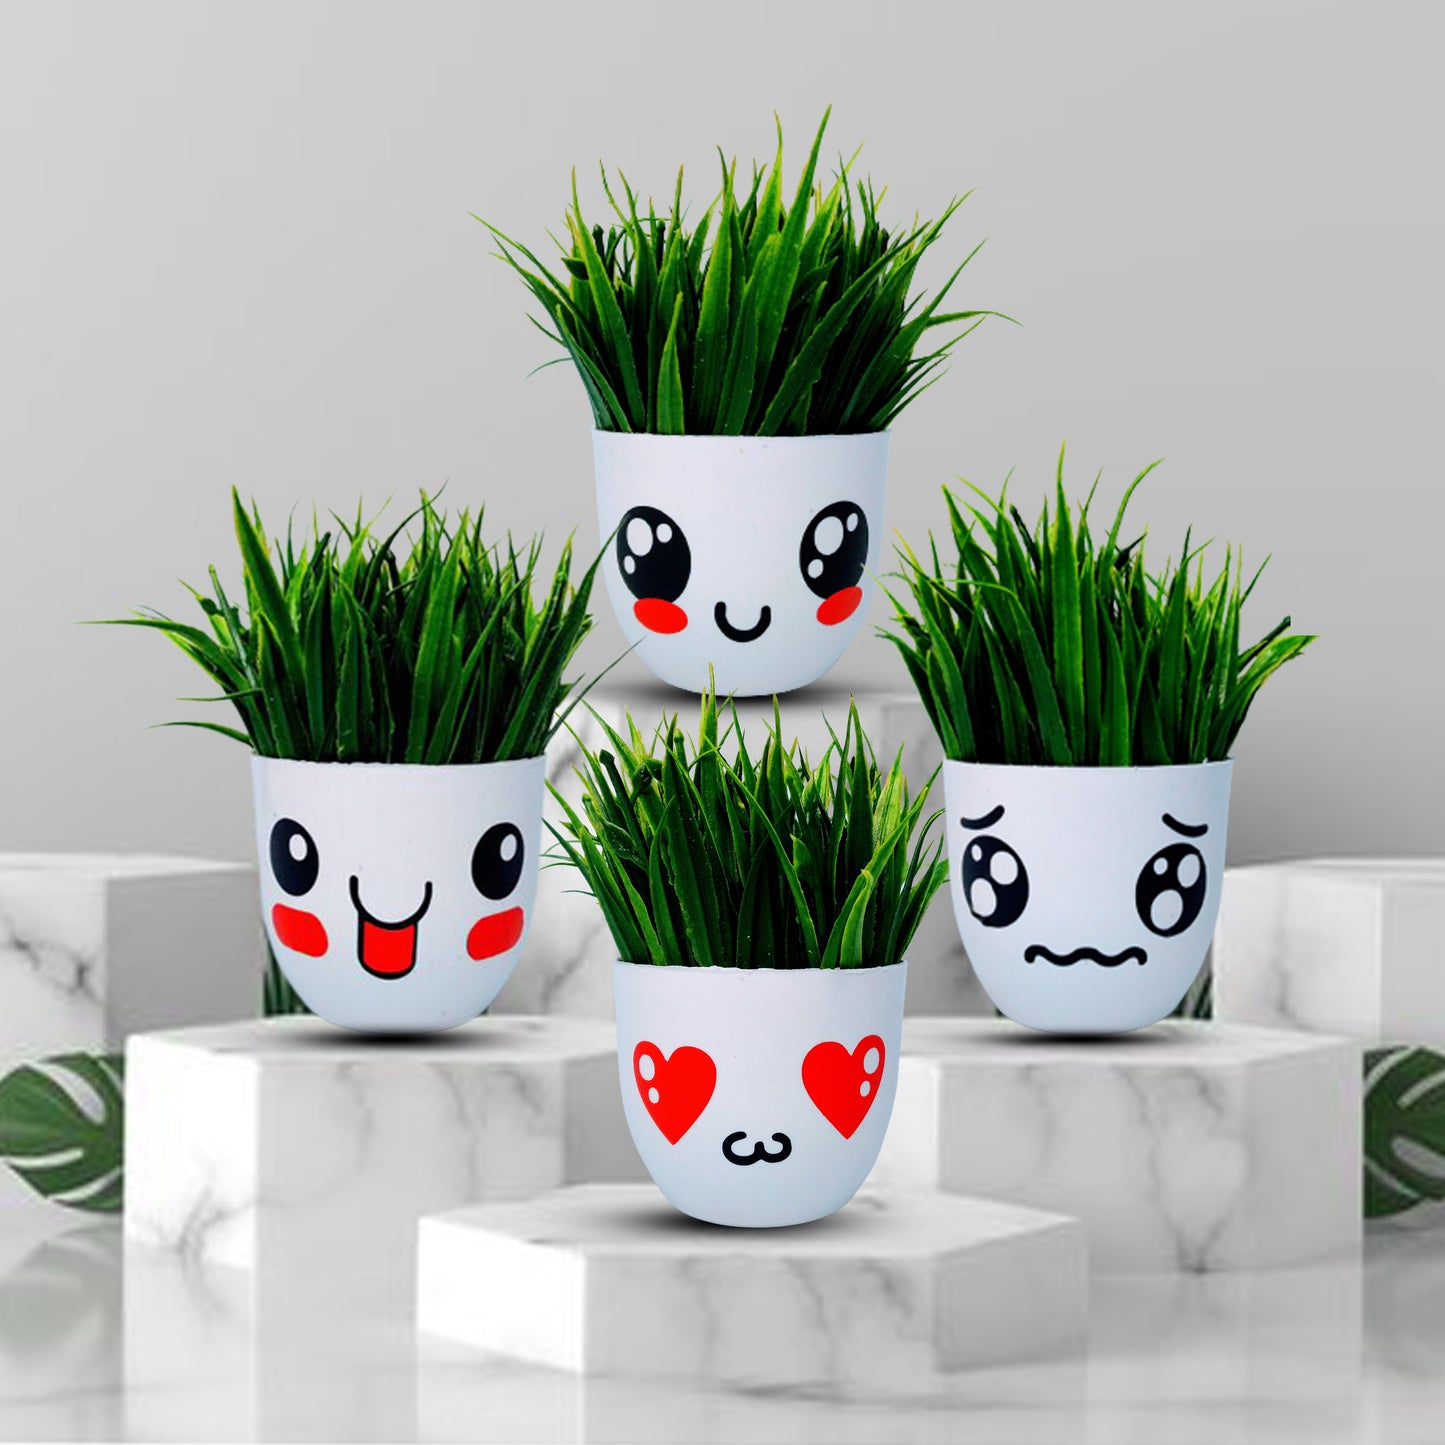 Rakakart- Artificial Plants with Cute Face,set of 4 emoji pots